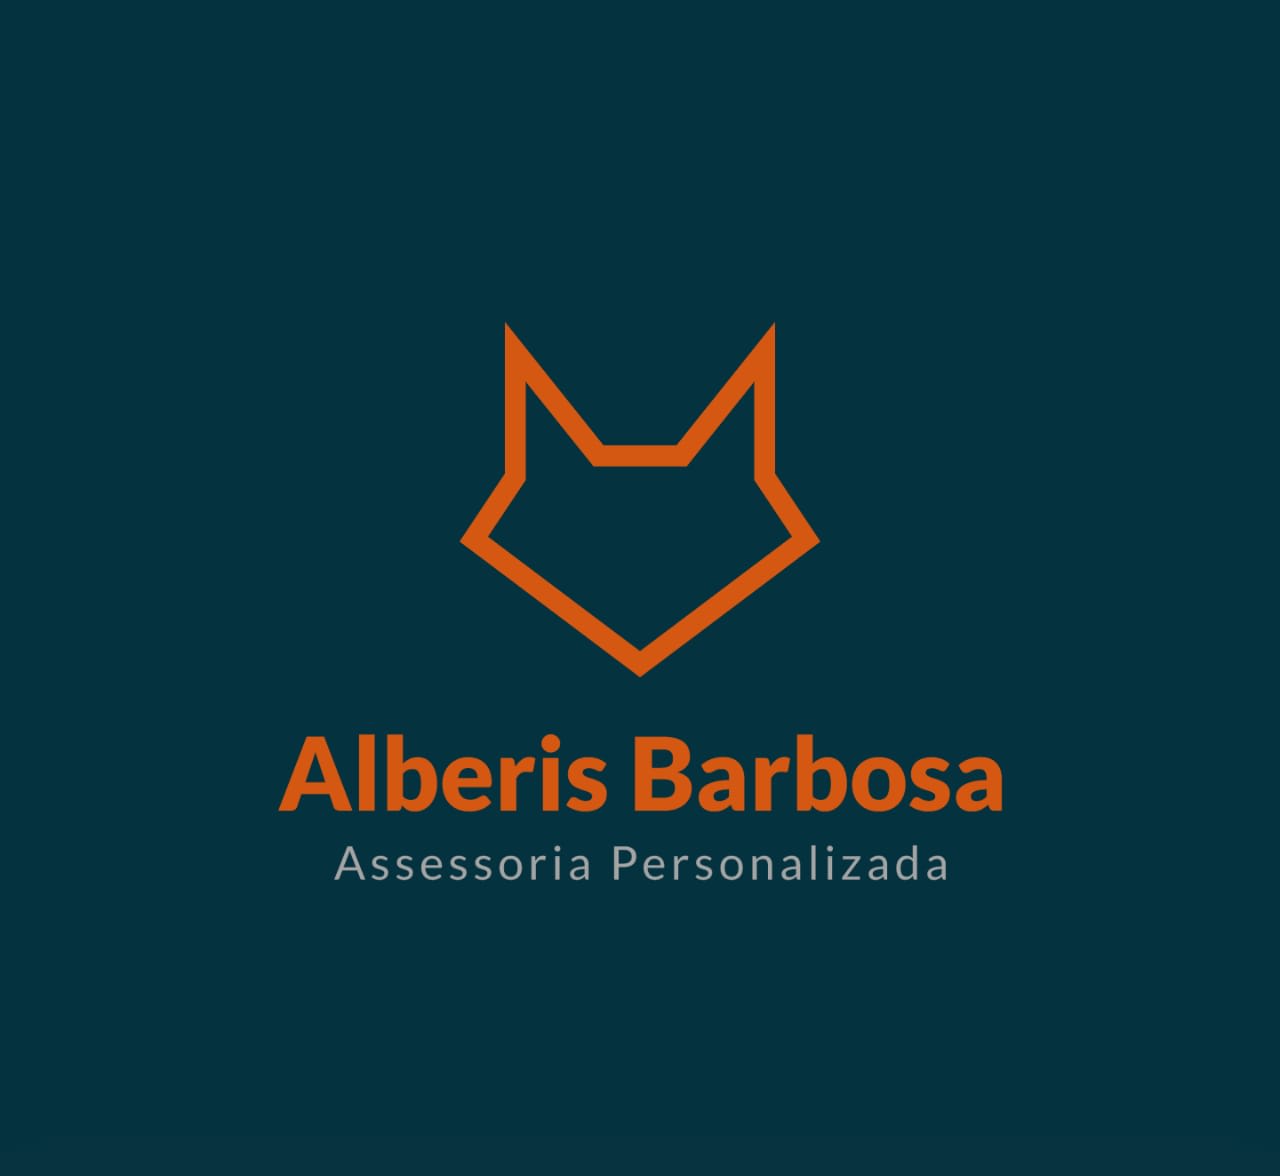 Alberis Barbosa Assessoria Personalizada